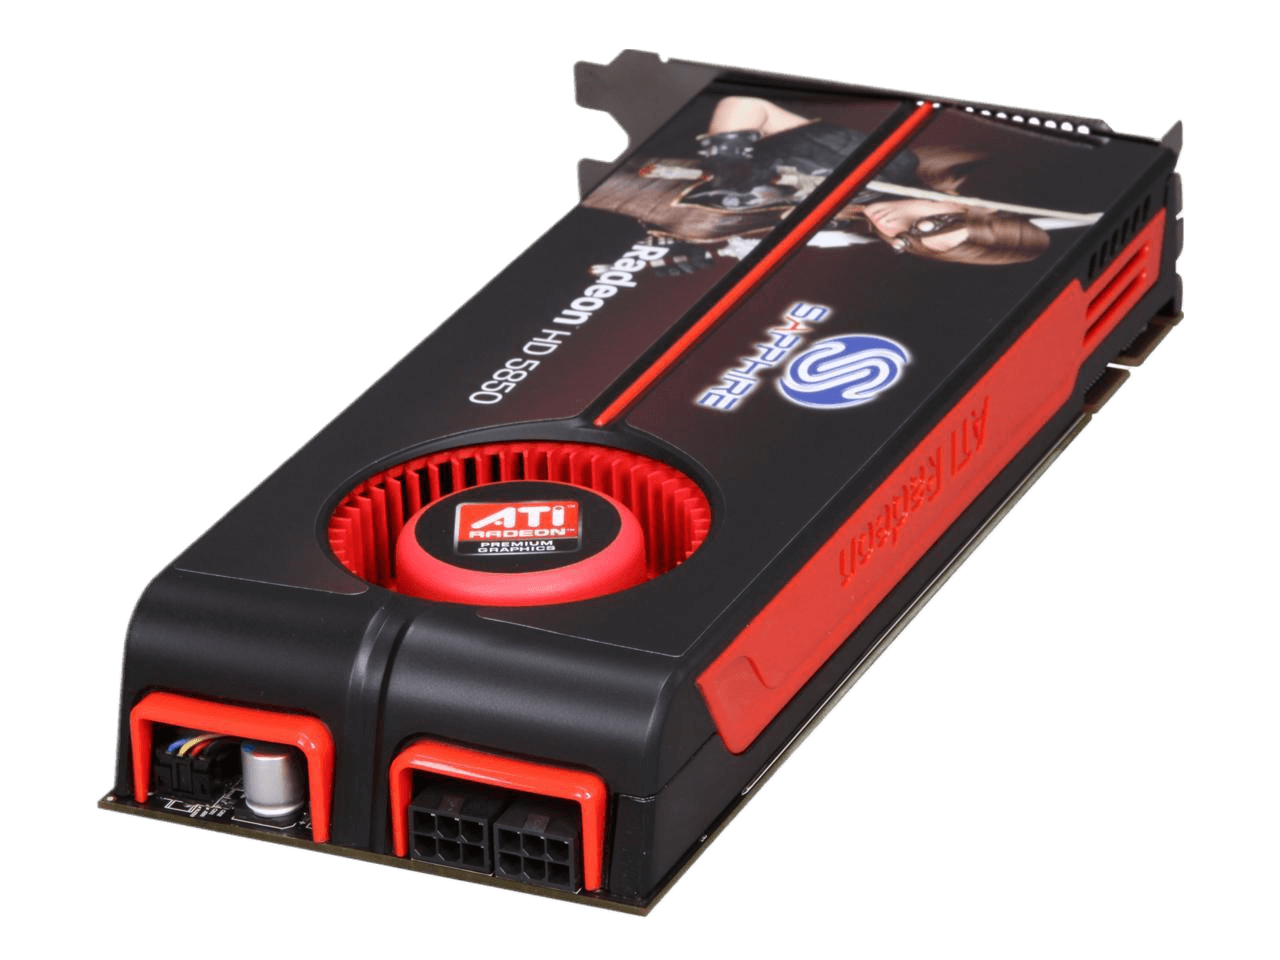 Sapphire Radeon HD 5850 725 MHz Core 1 GB GDDR5 PCI Express 2.0 x16 Graphics Card